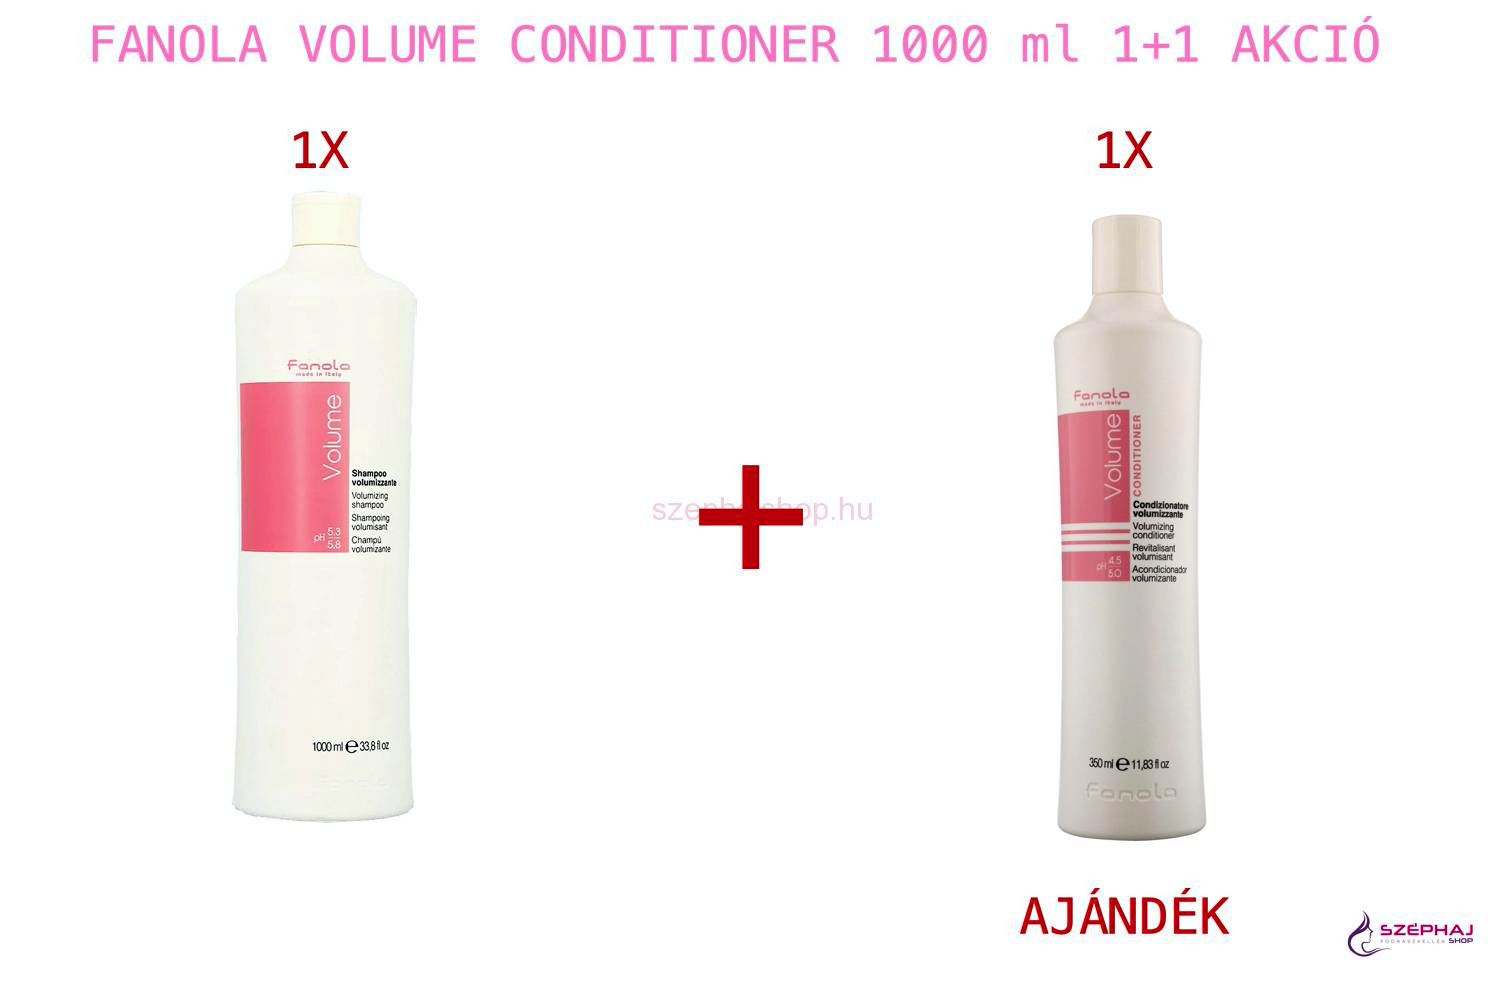 FANOLA Volume Conditioner 1000 ml 1+1 AKCIÓ